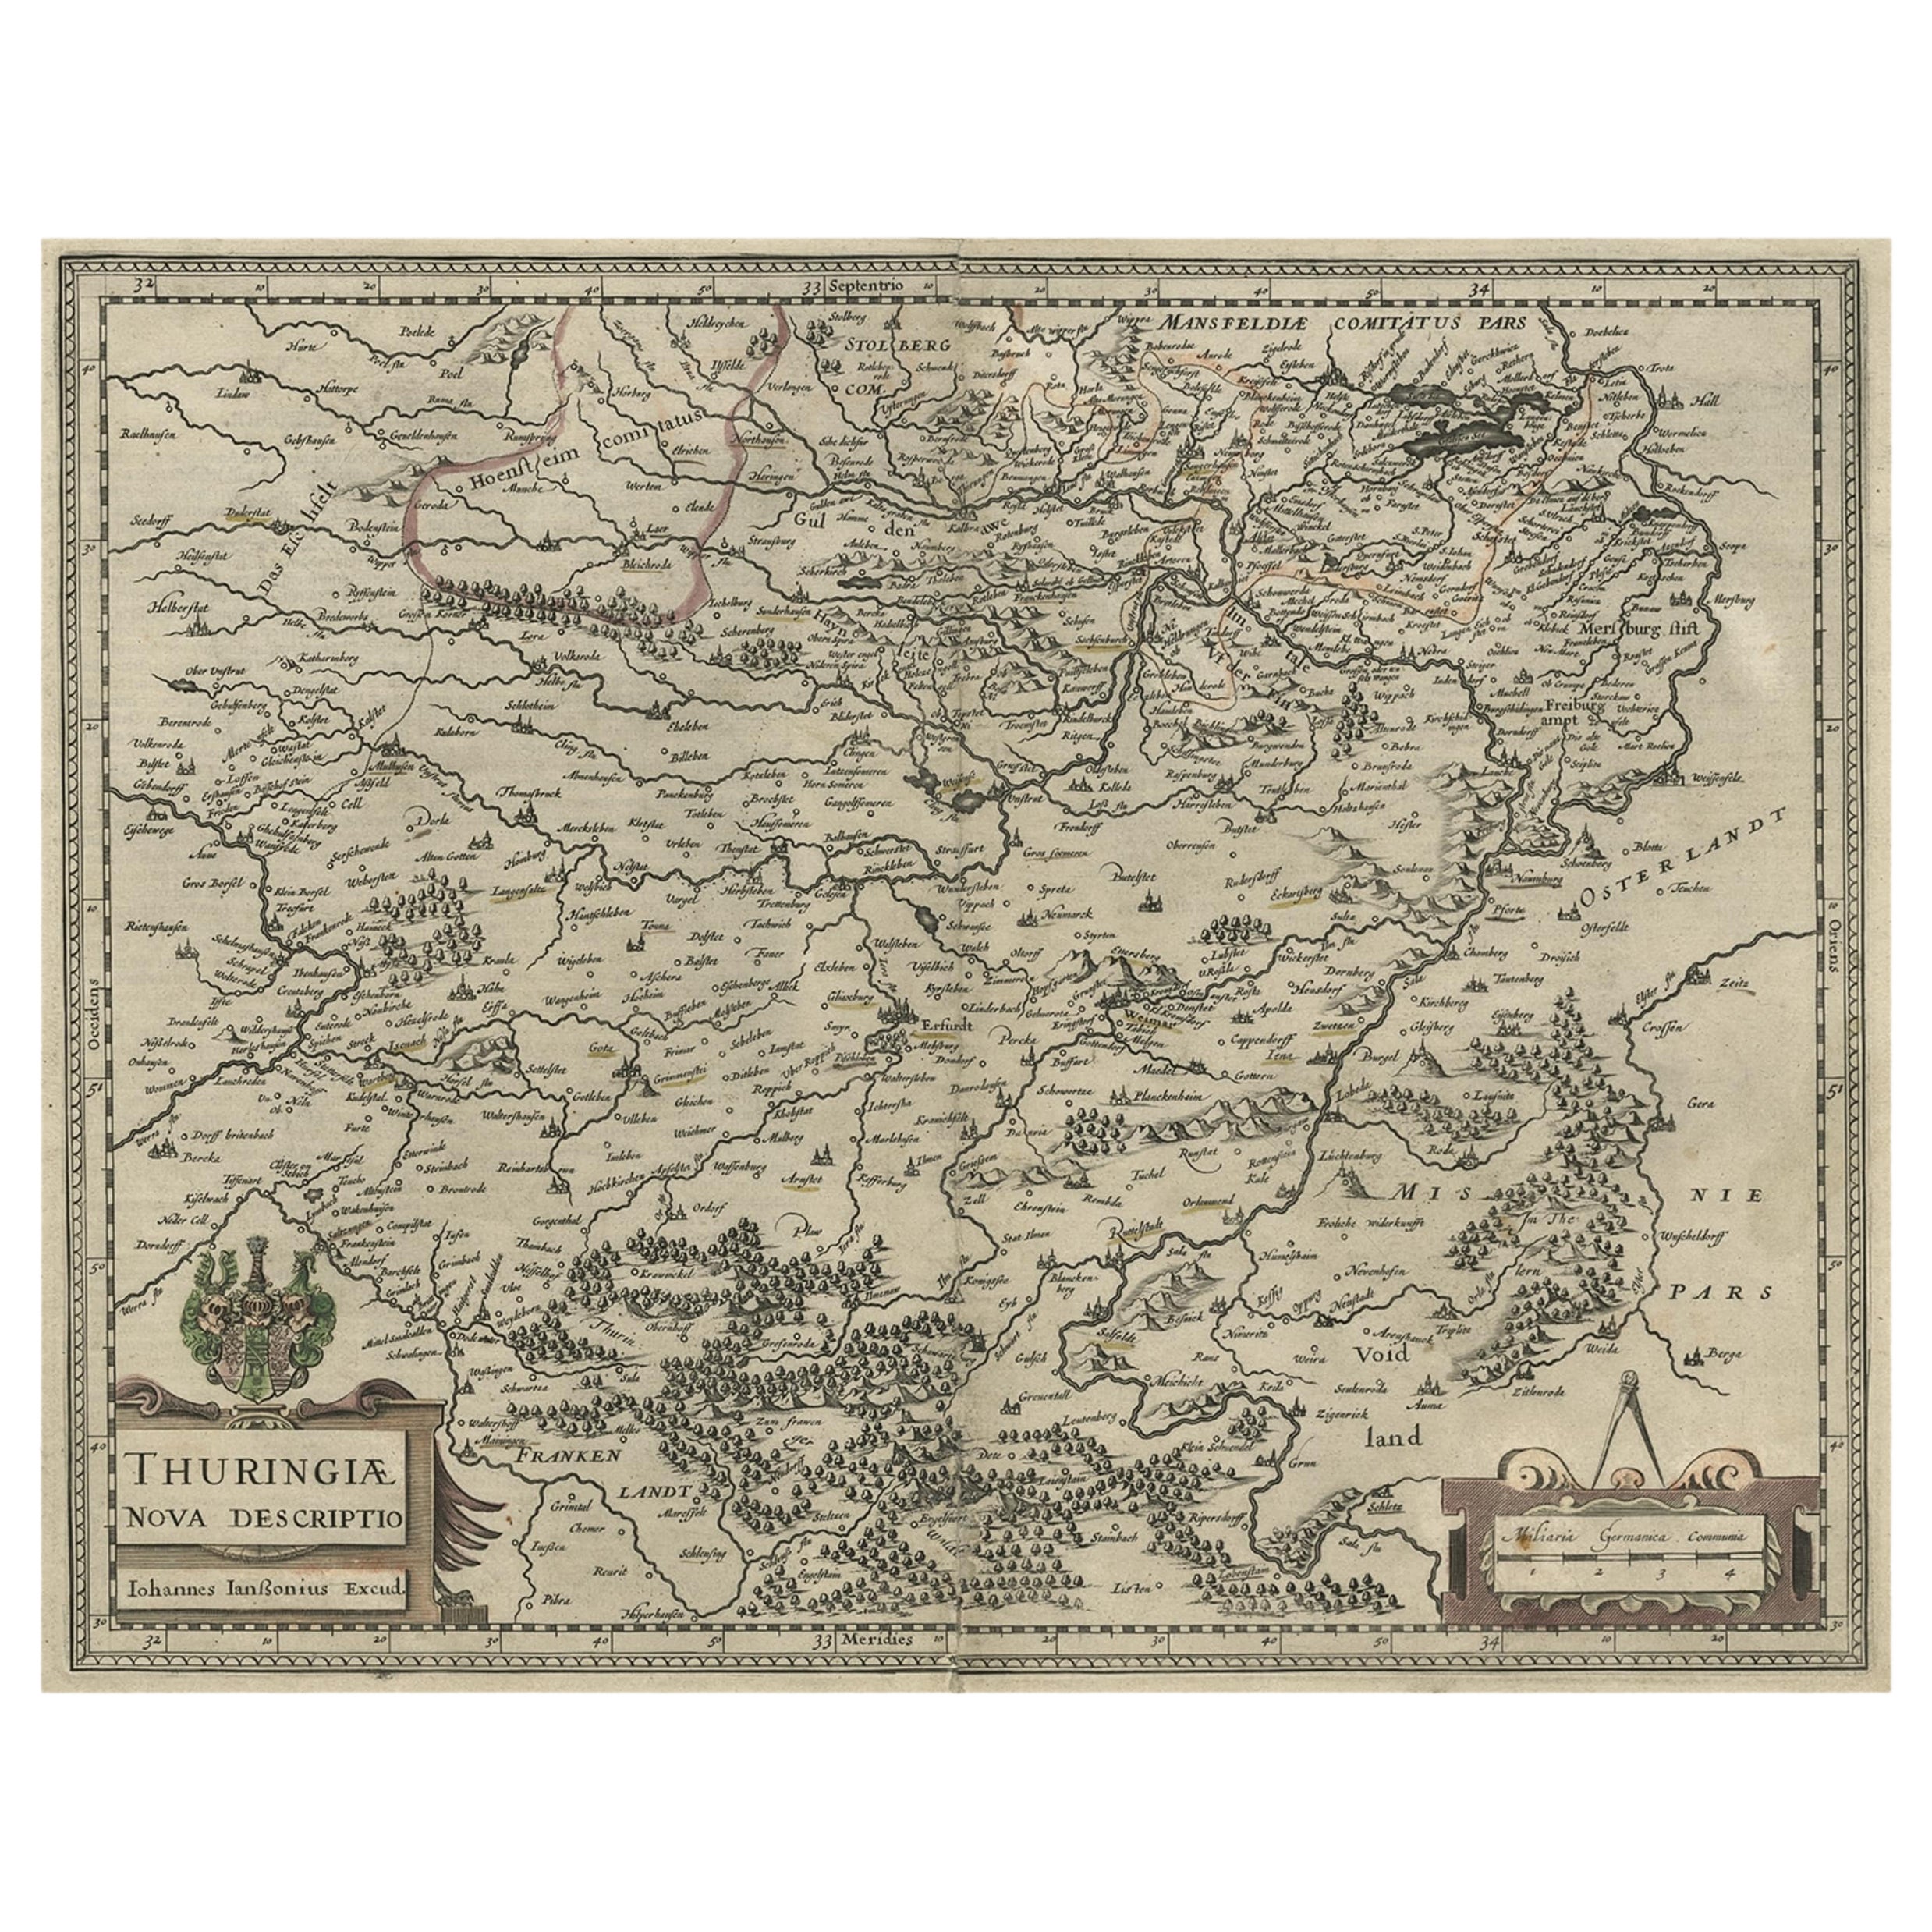 Detailed Original Antique Map of Thuringia, Germany by J. Janssonius, ca.1650